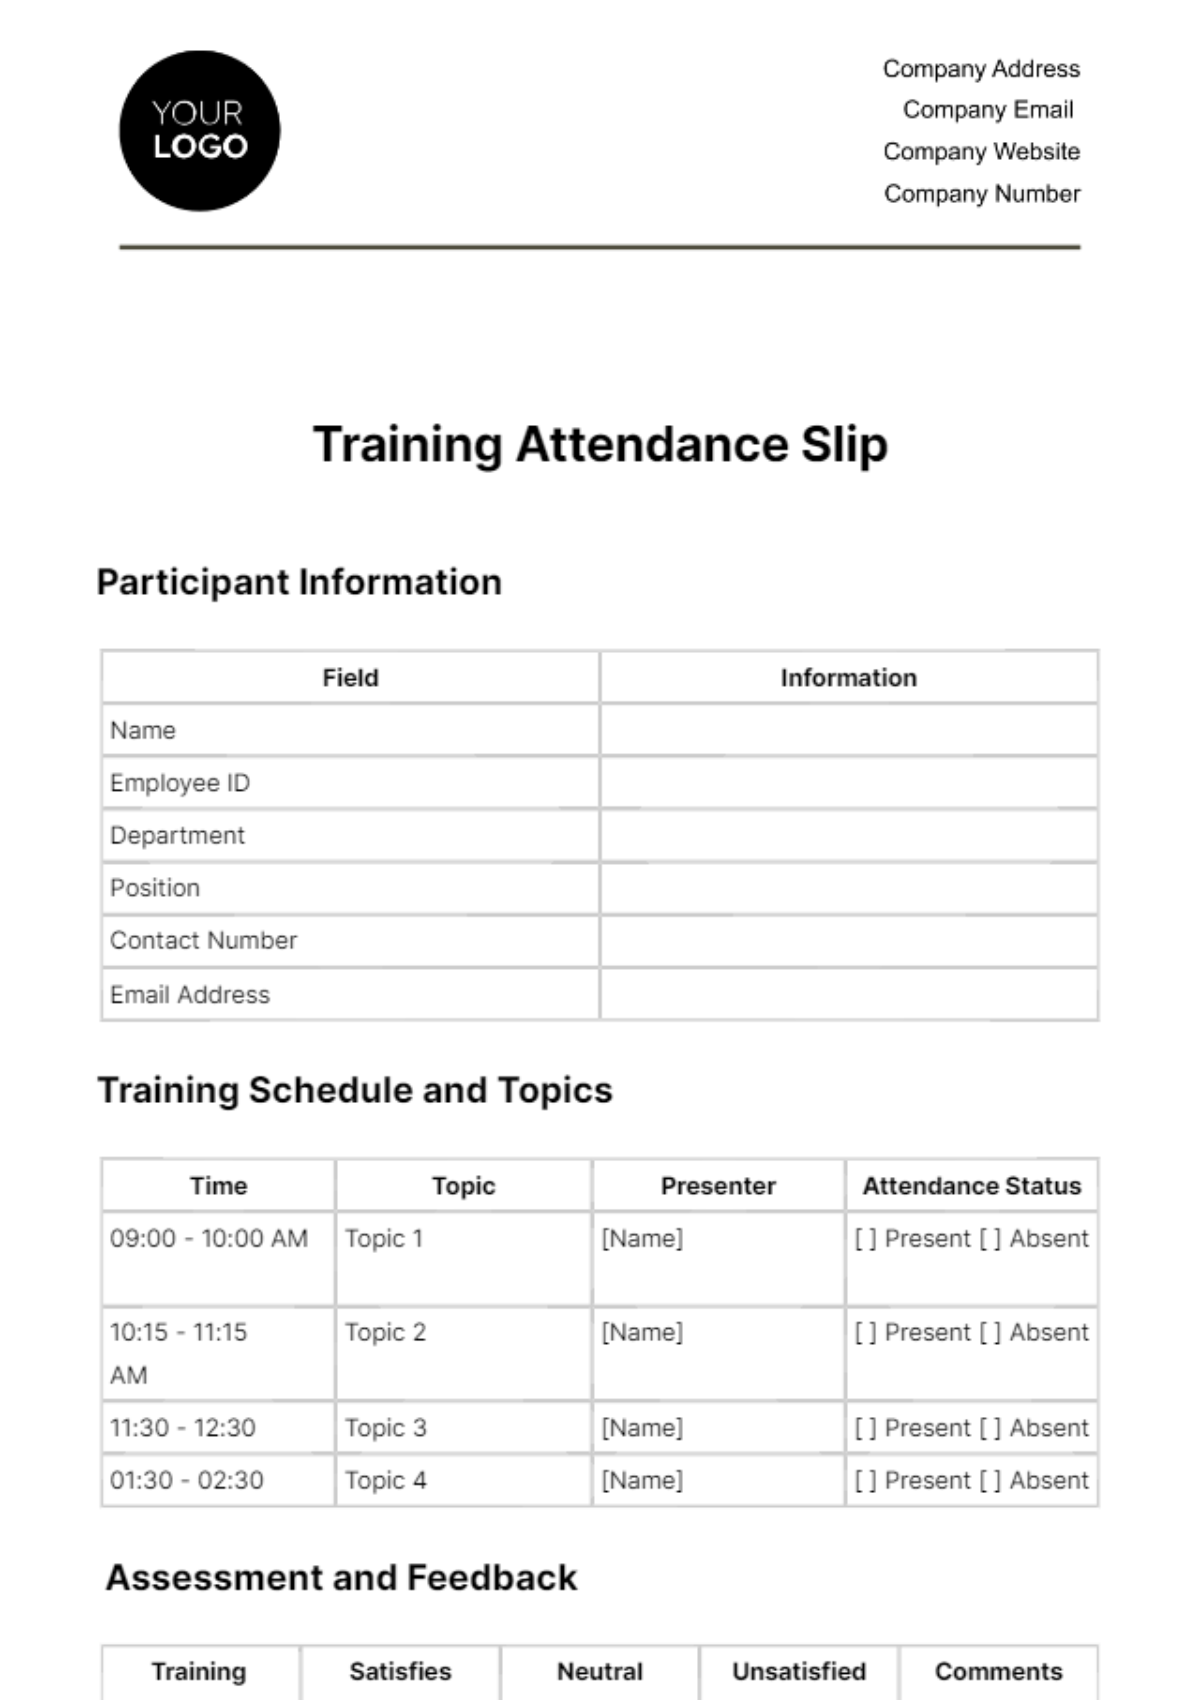 Training Attendance Slip HR Template